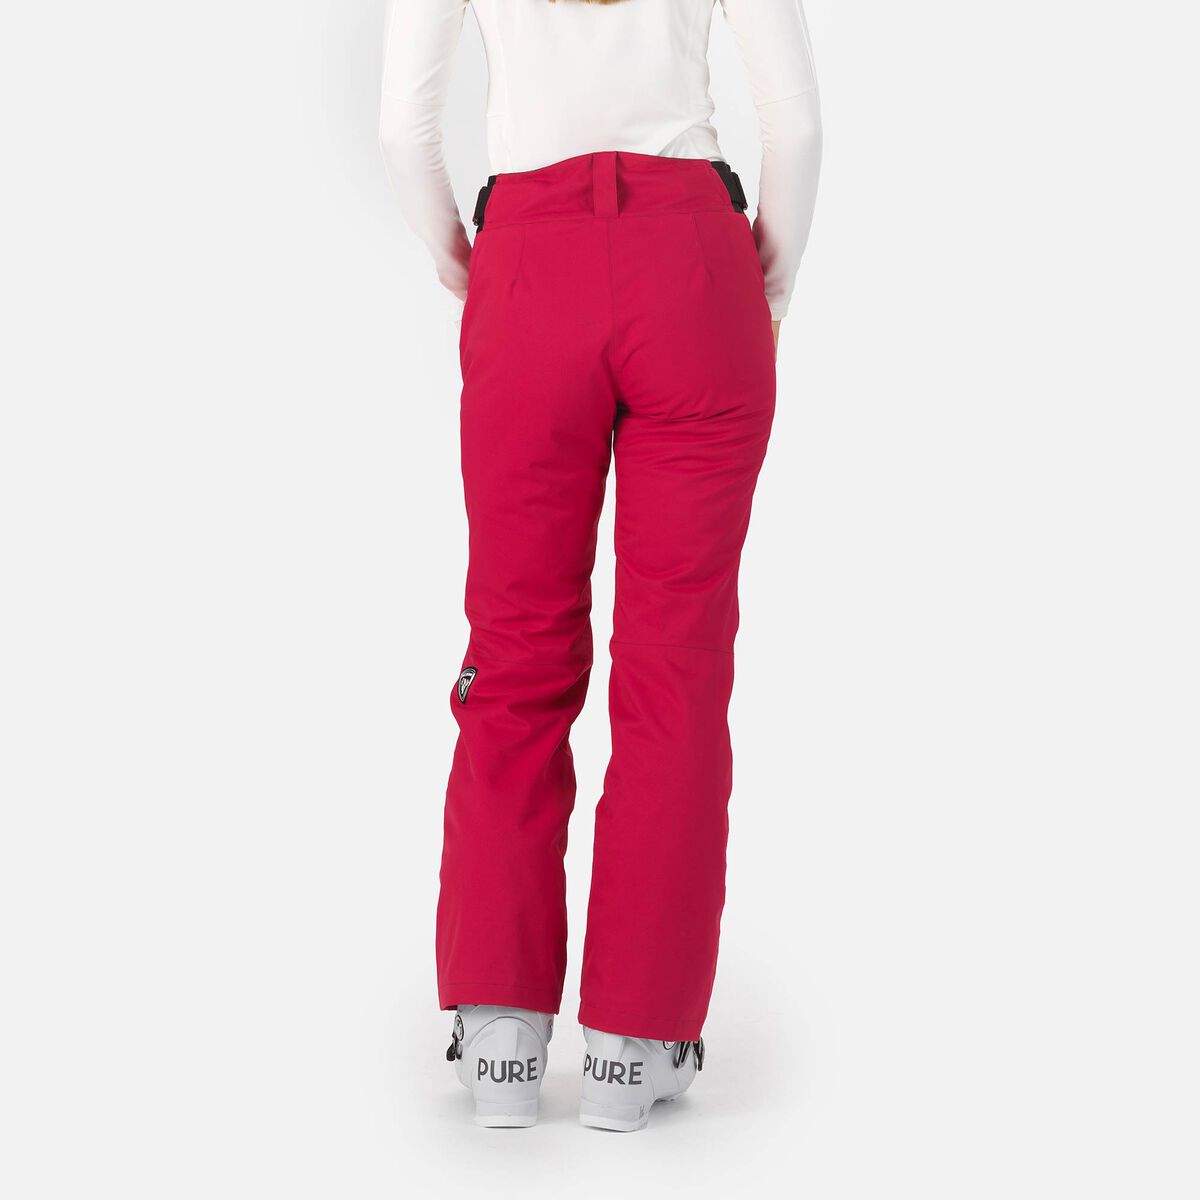 Rossignol Women's Ski Pants Pink/Purple